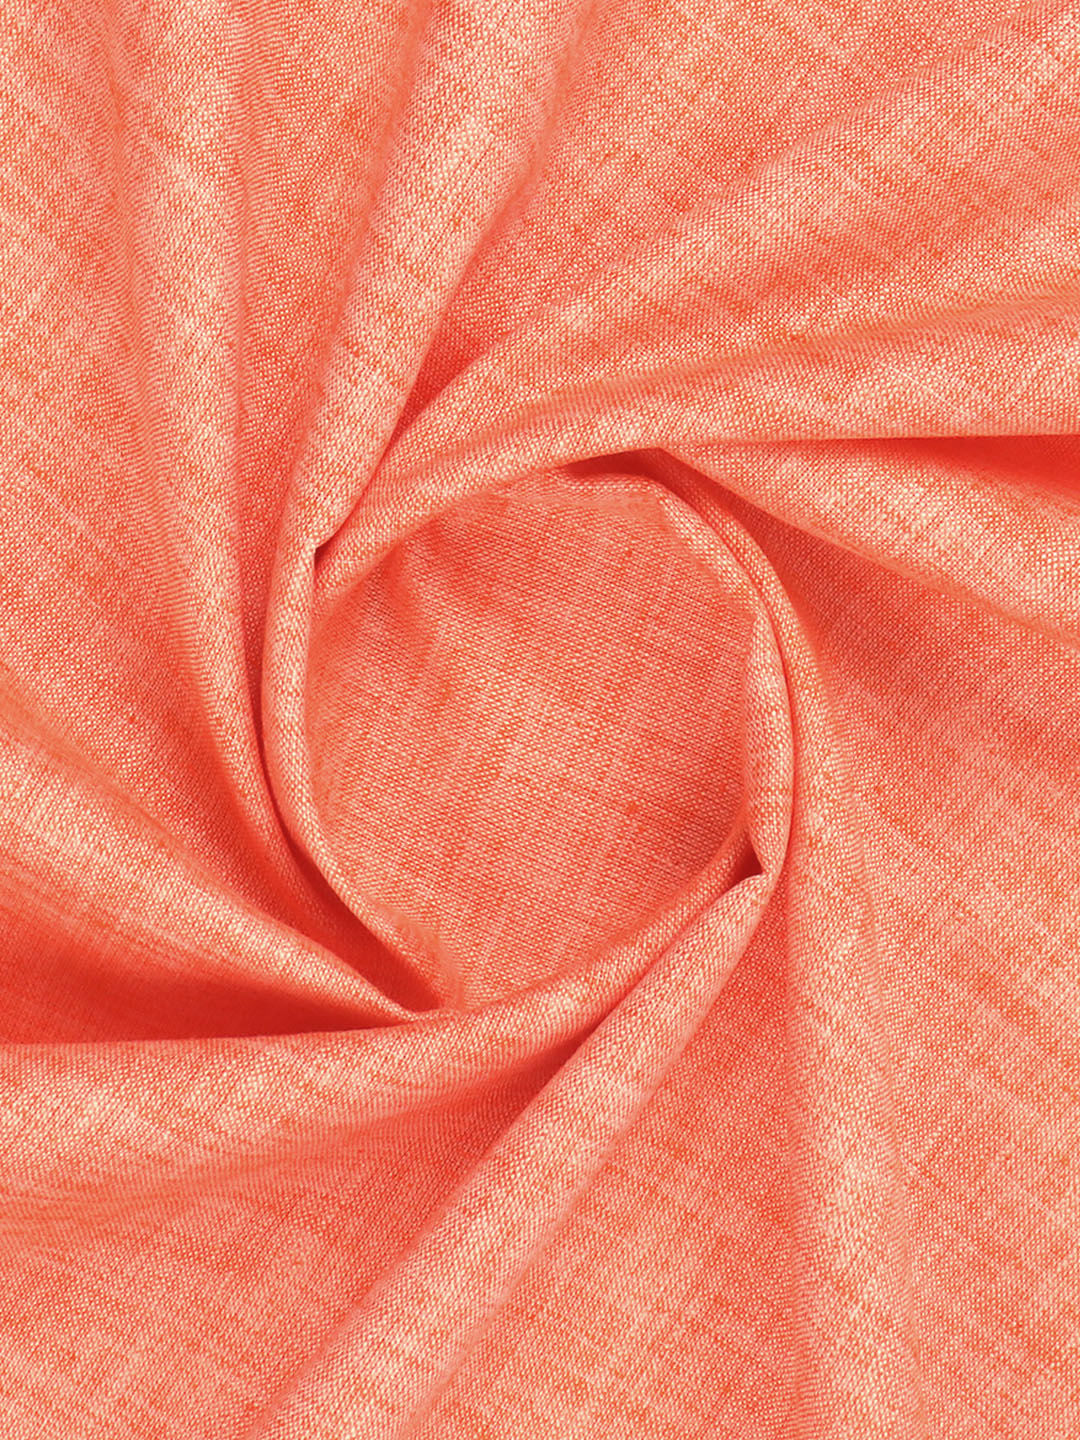 Cotton Blend Lite Orange Colour Kurtha Fabric Lampus